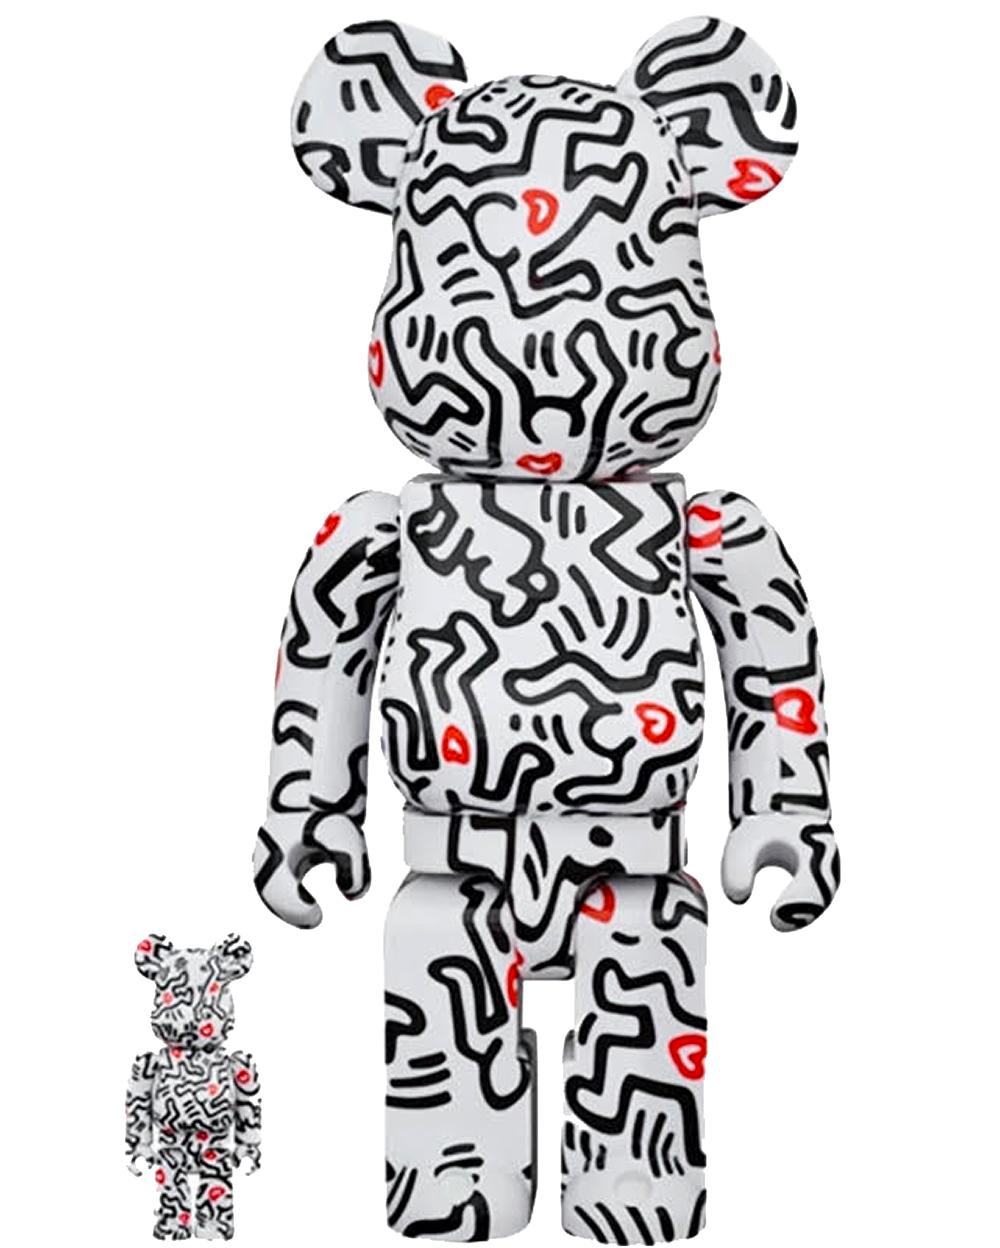 Keith Haring Bearbrick 400% art toy  (Keith Haring BE@RBRICK) 